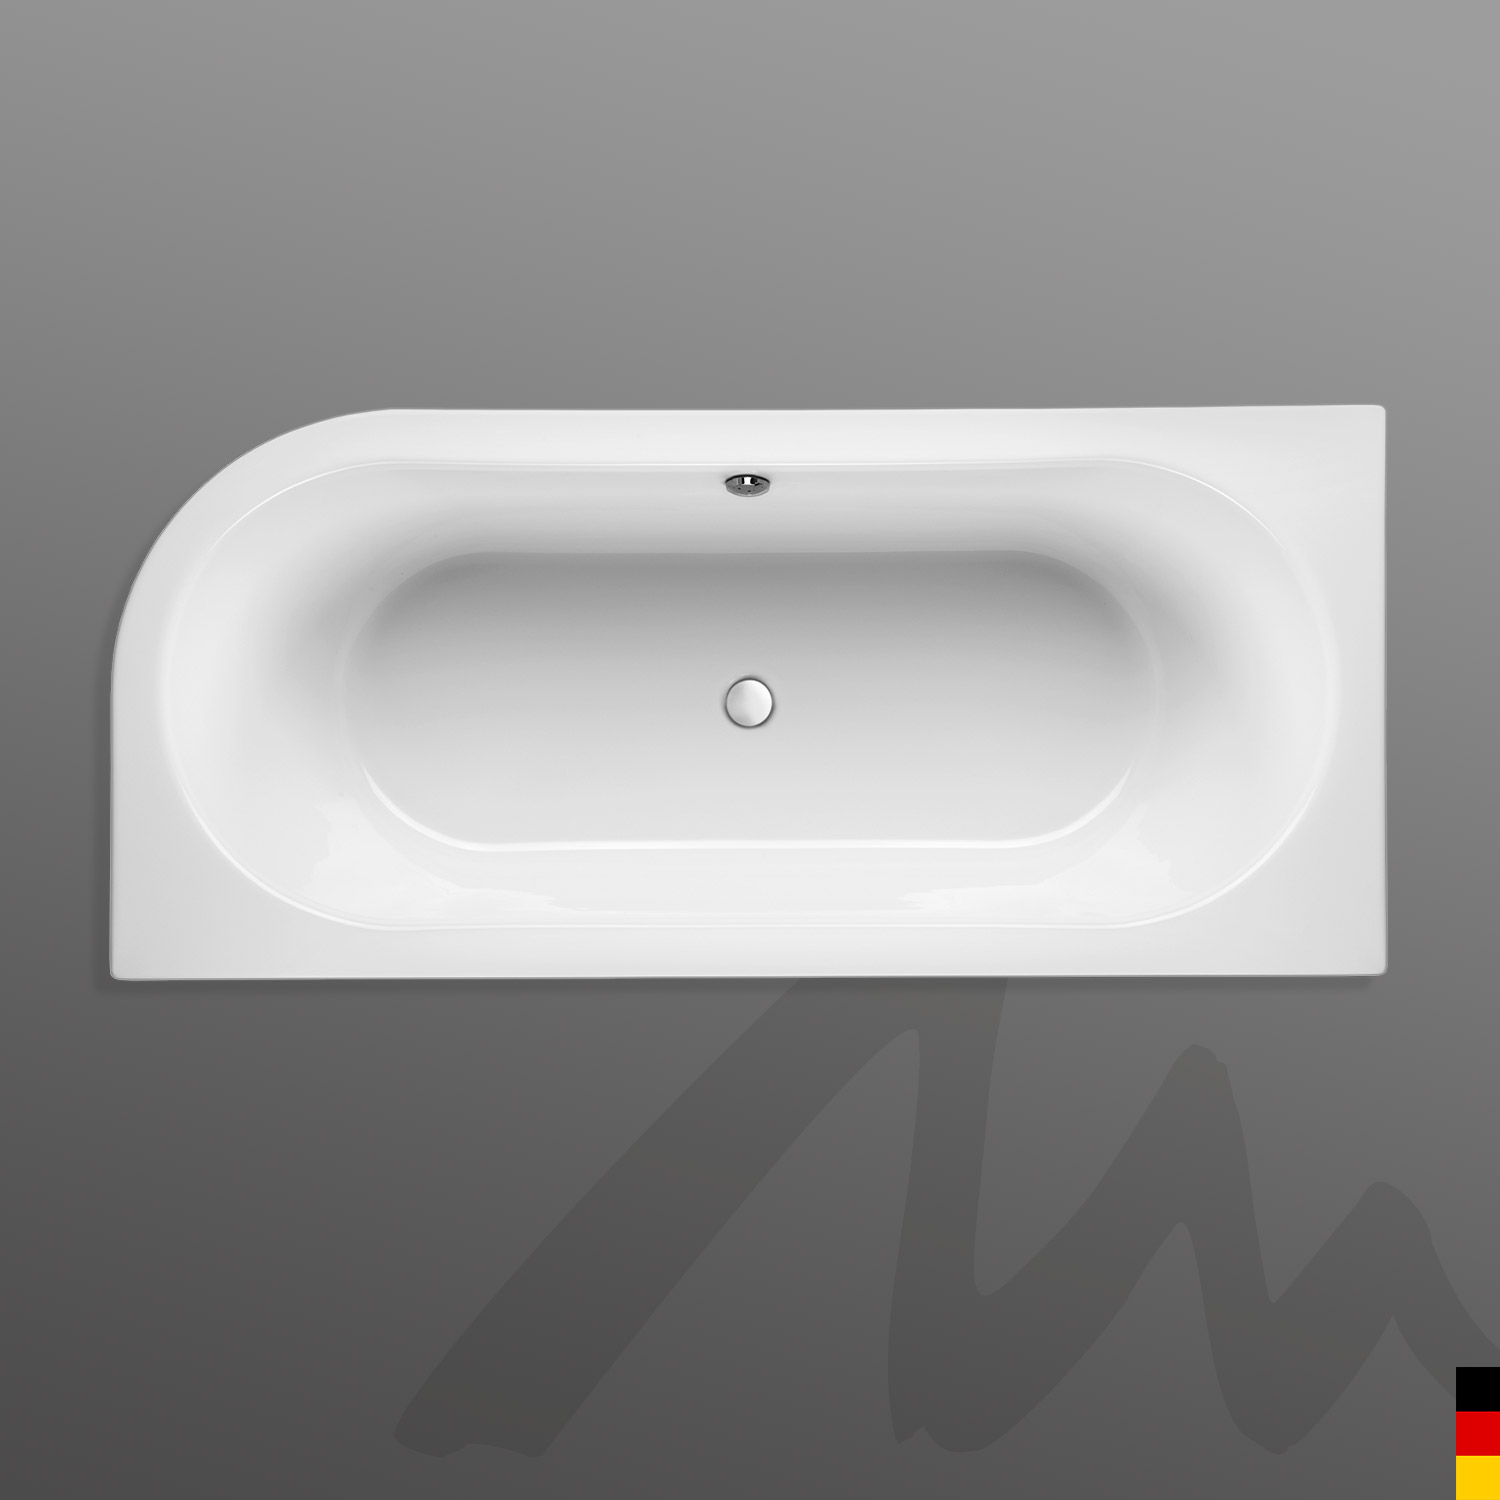 Mauersberger Badewanne Oval Primo 1 - 180/80 duo Ausführung links mit Acryl-Schürze/Panel  180x80x45  Farbe:weiß